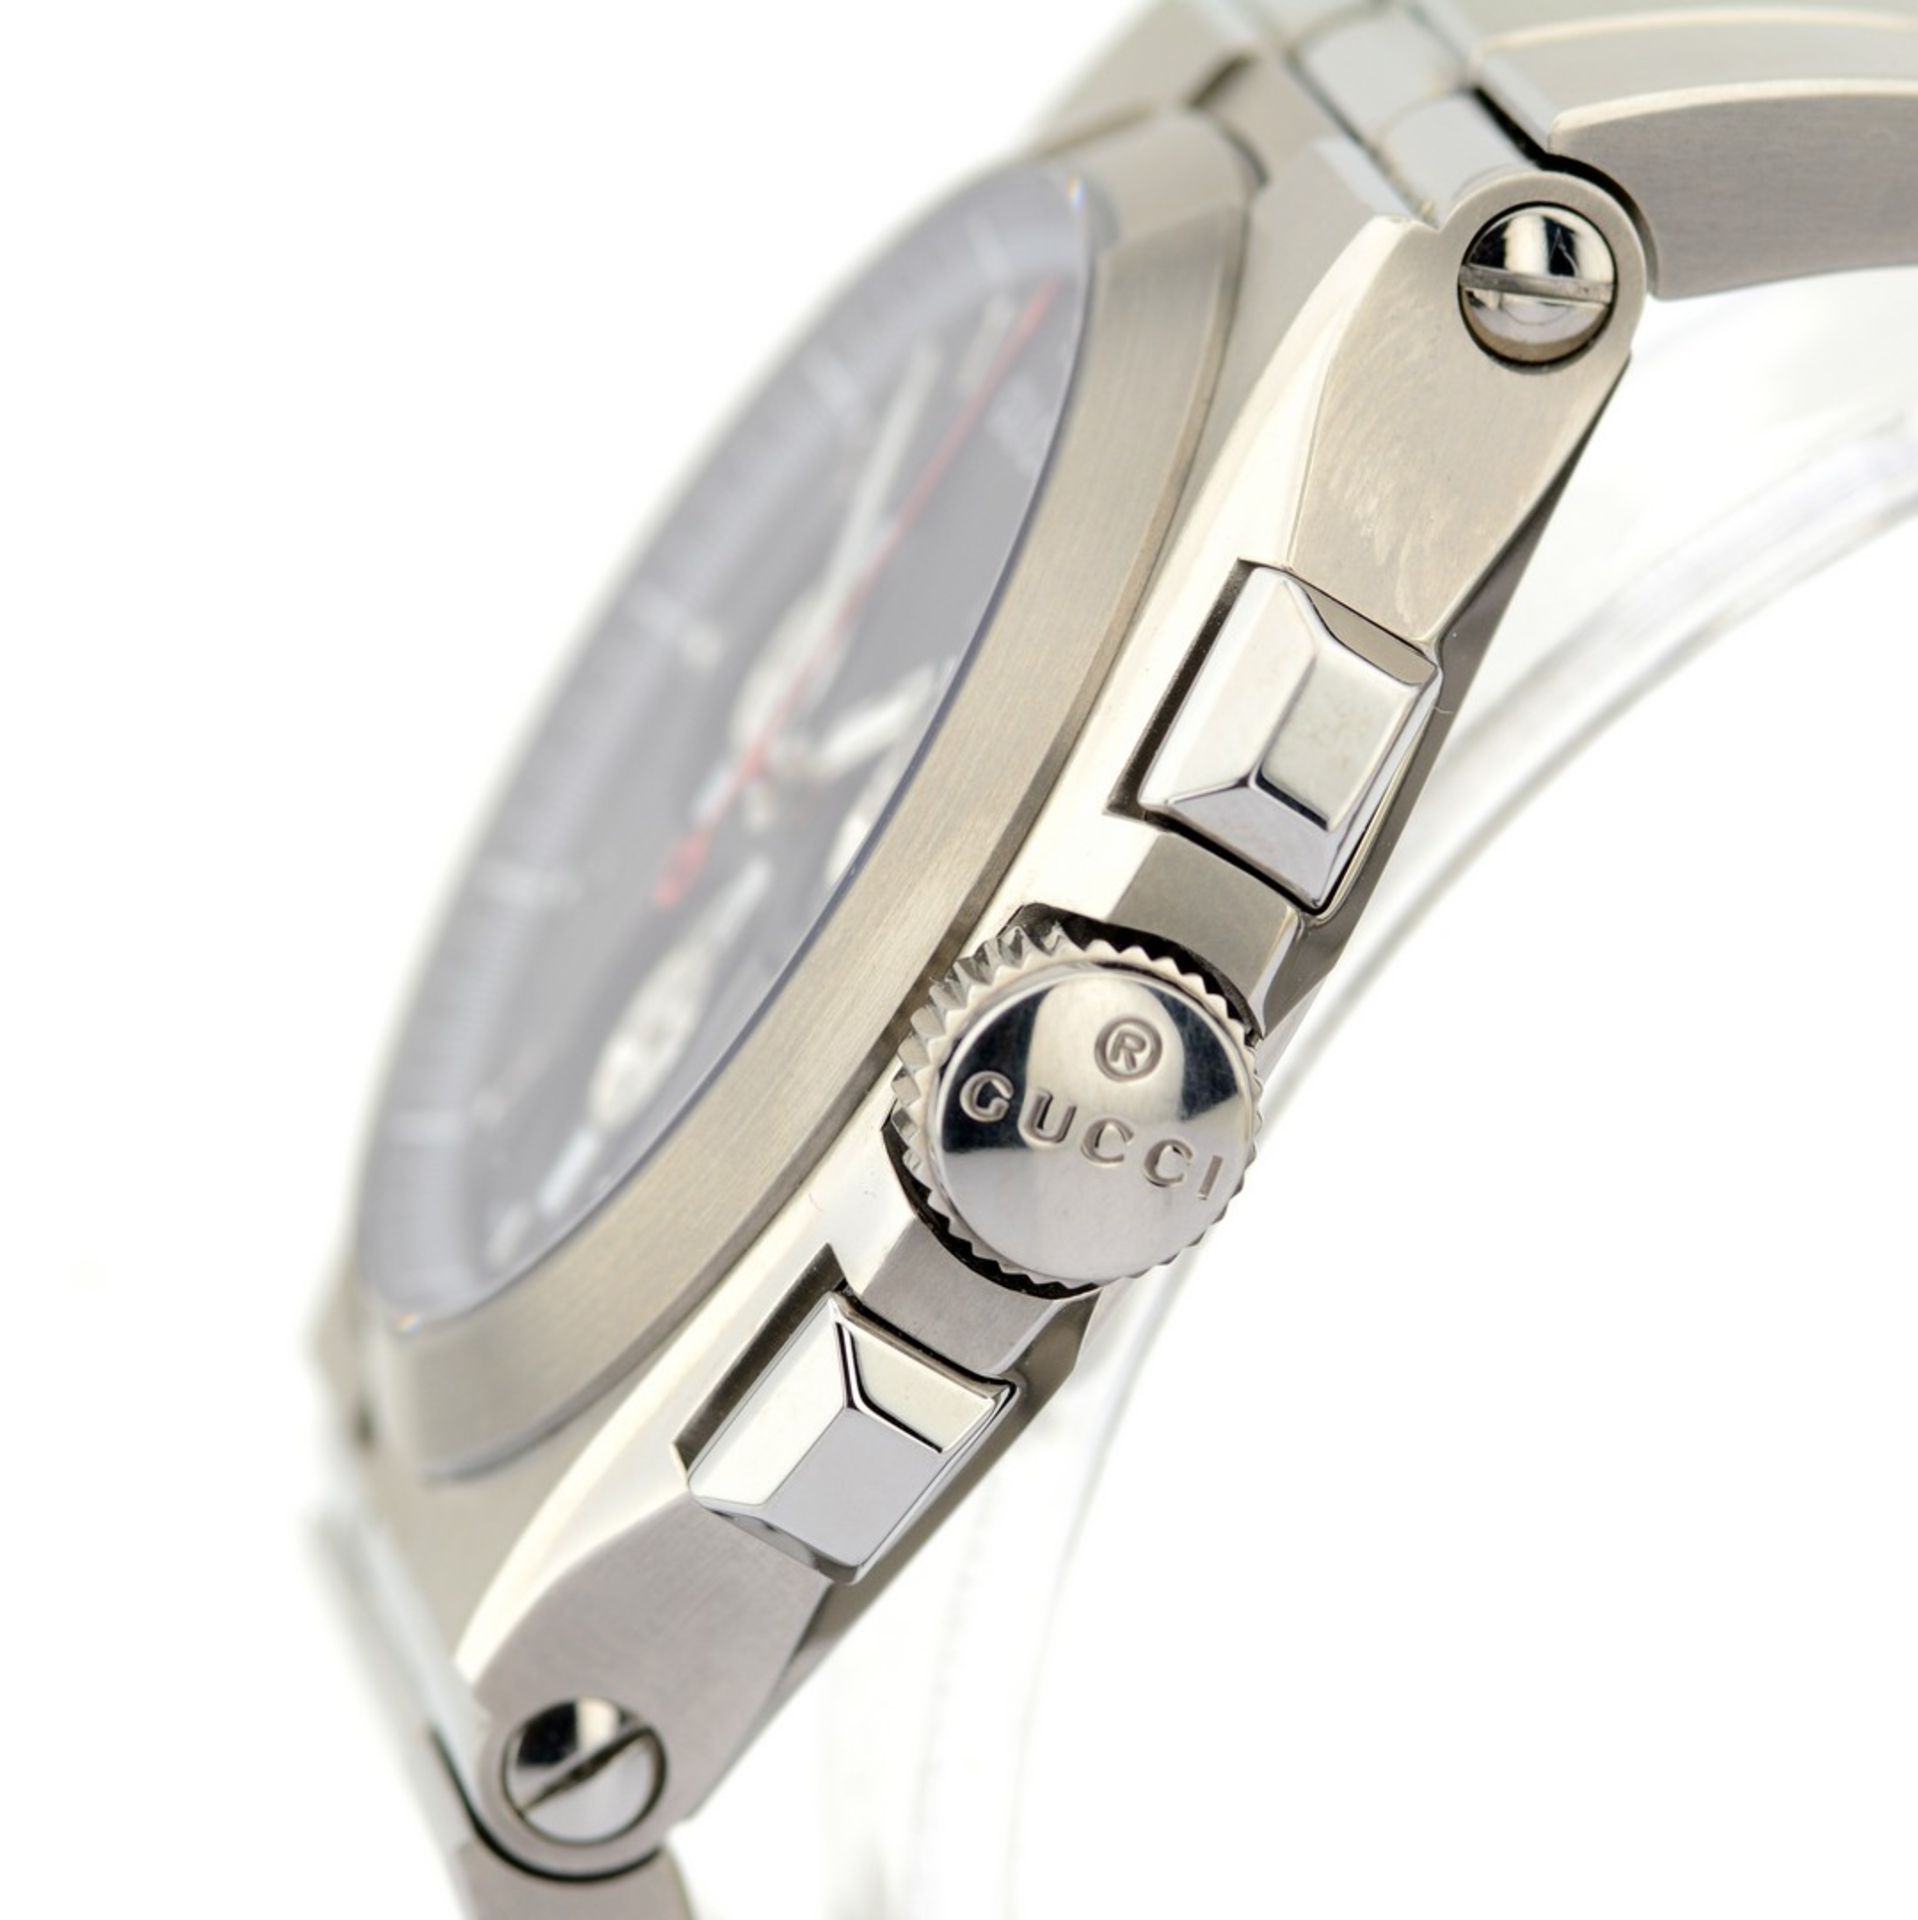 Gucci / Pantheon Automatic Chronograph - Gentlemen's Titanium Wristwatch - Image 8 of 12